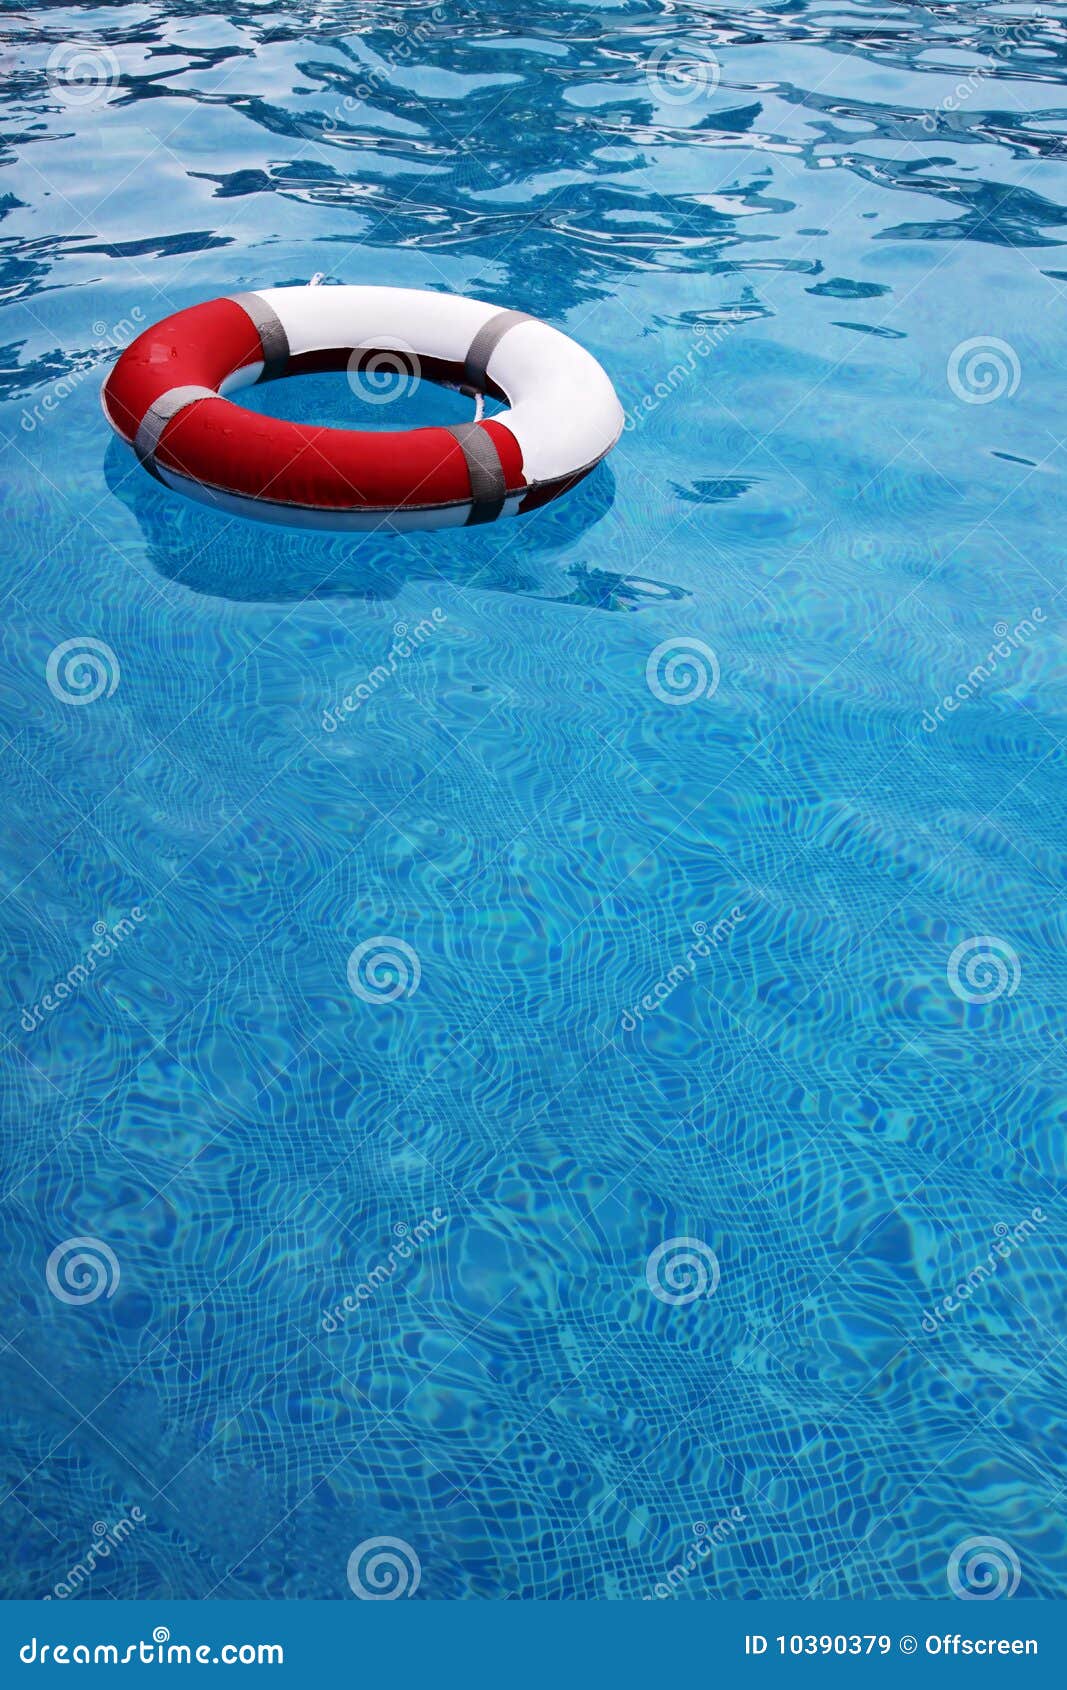 Life buoy stock image. Image of rescue, helping, buoy - 10390379